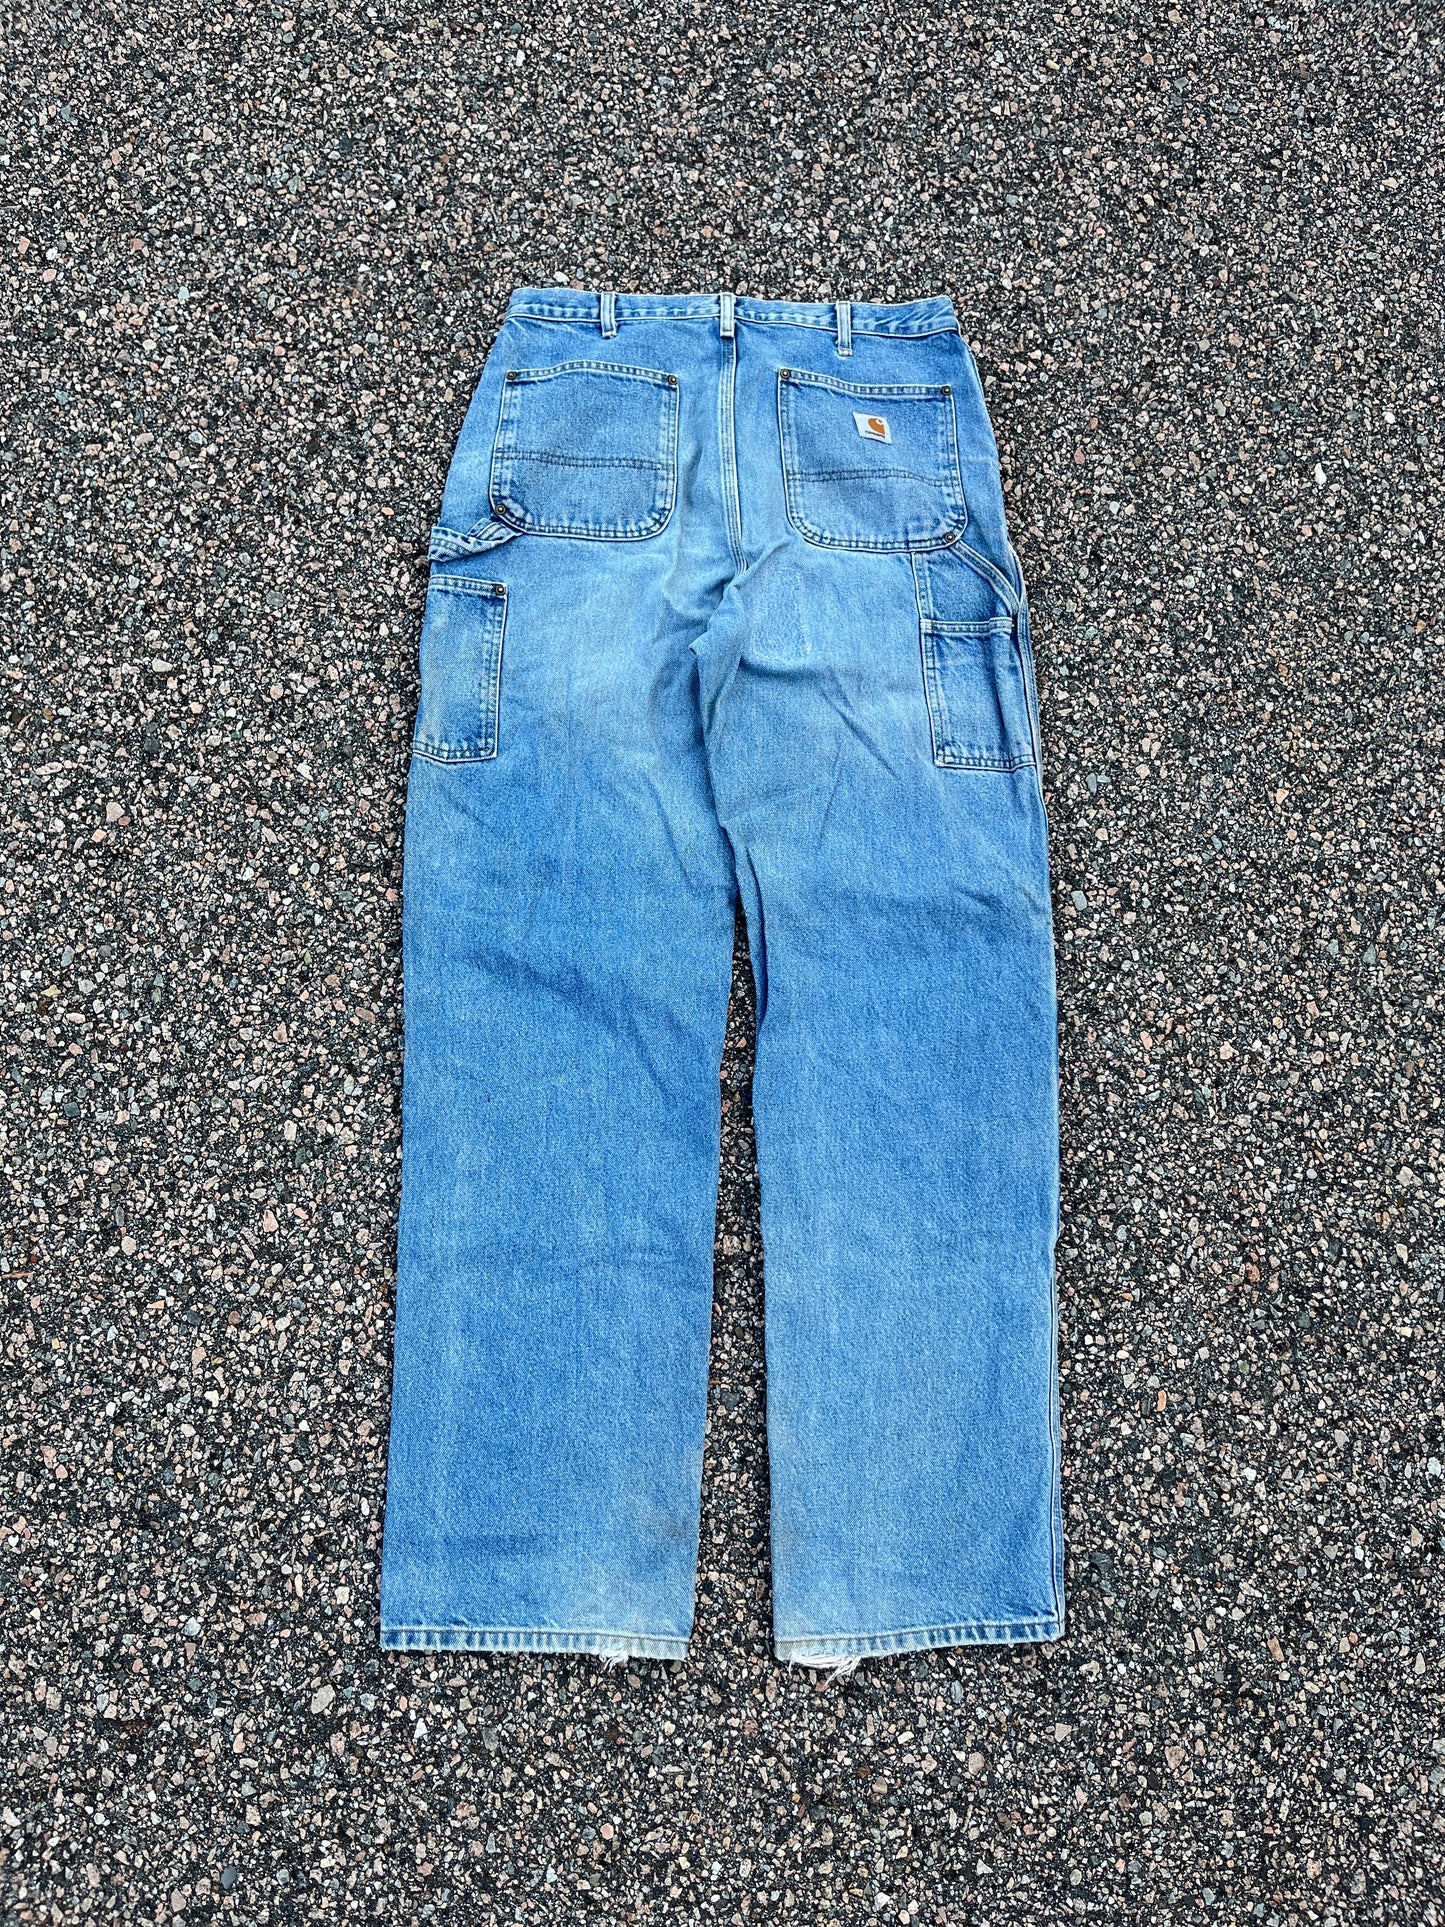 Faded Denim Carhartt Double Knee Pants - 32 x 34.5